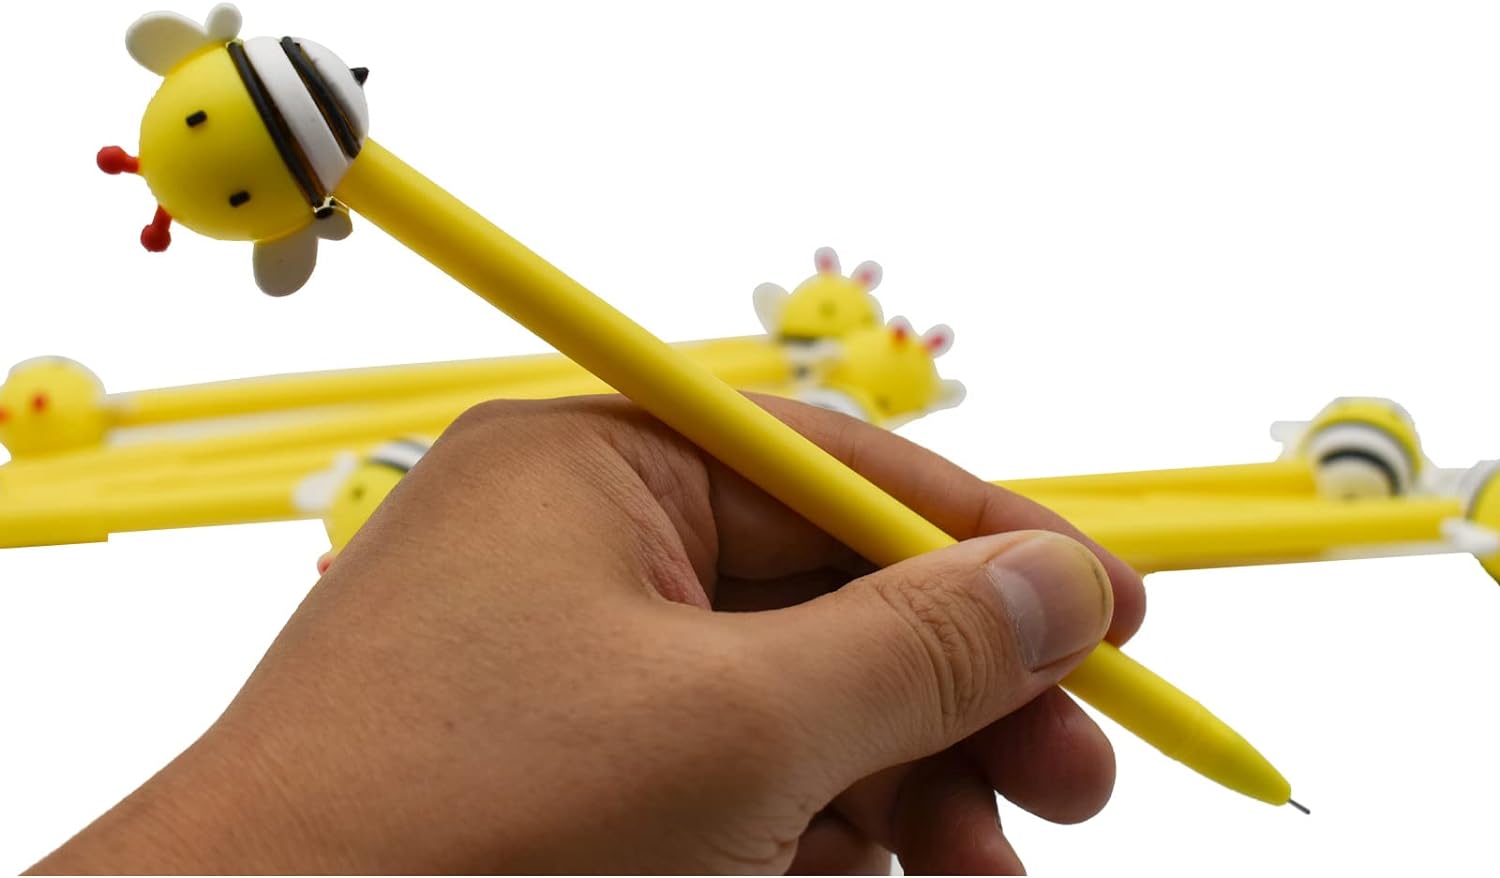 8PCS Funny Yellow Bees Pens Gel Pens 0.5mm Black Ink For Kids School